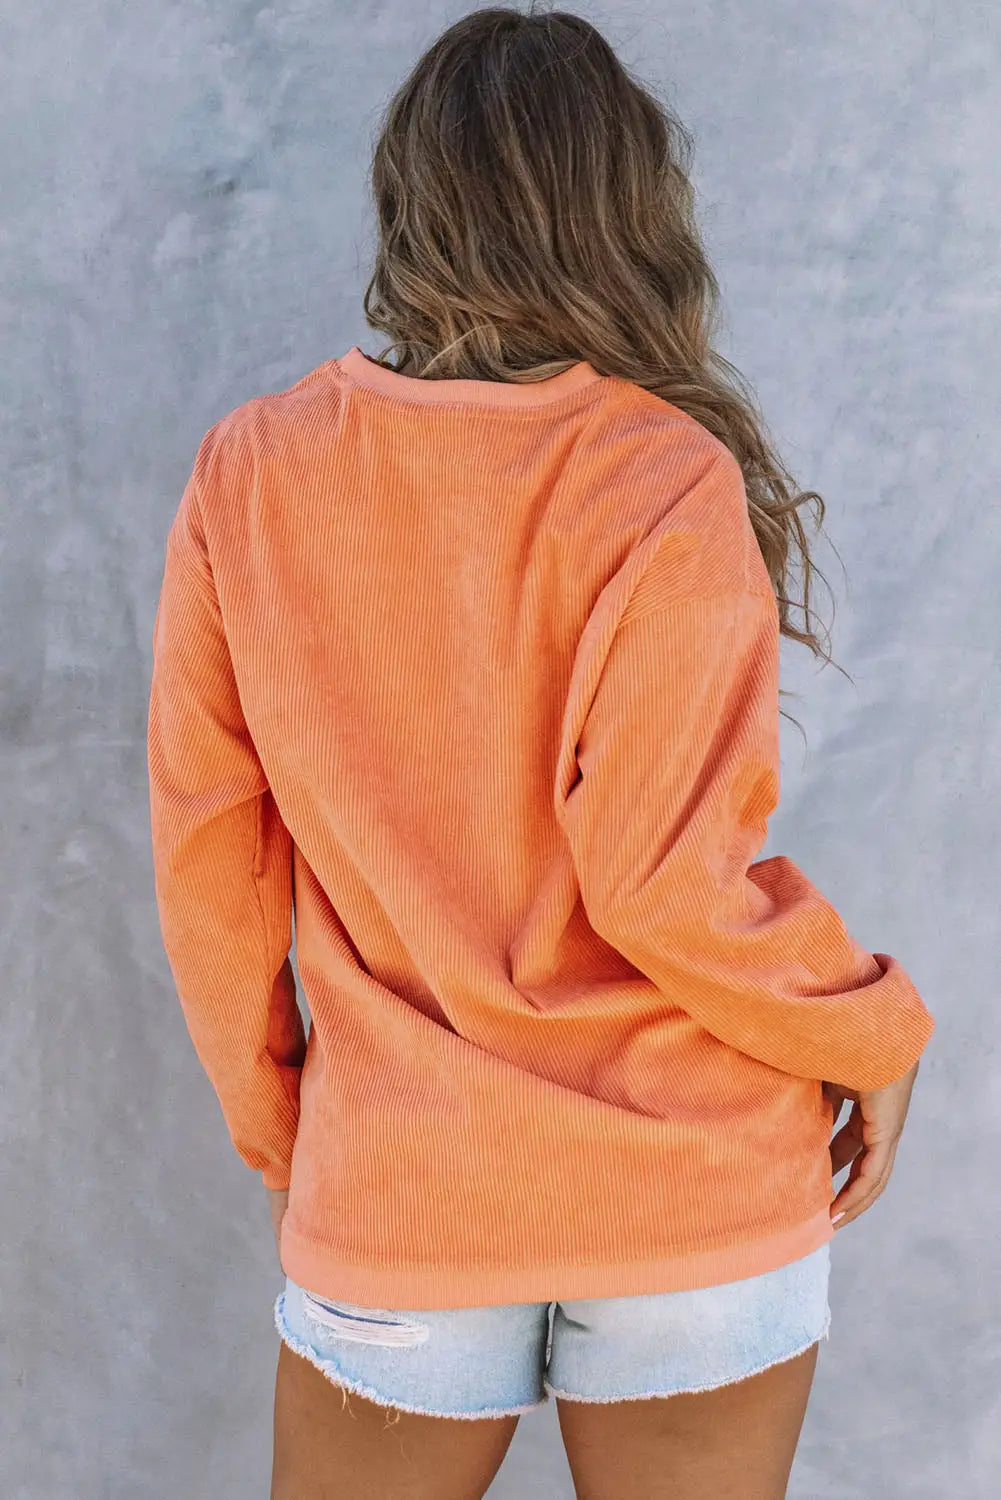 Orange howdy pumpkin halloween graphic corded sweatshirt - sweatshirts